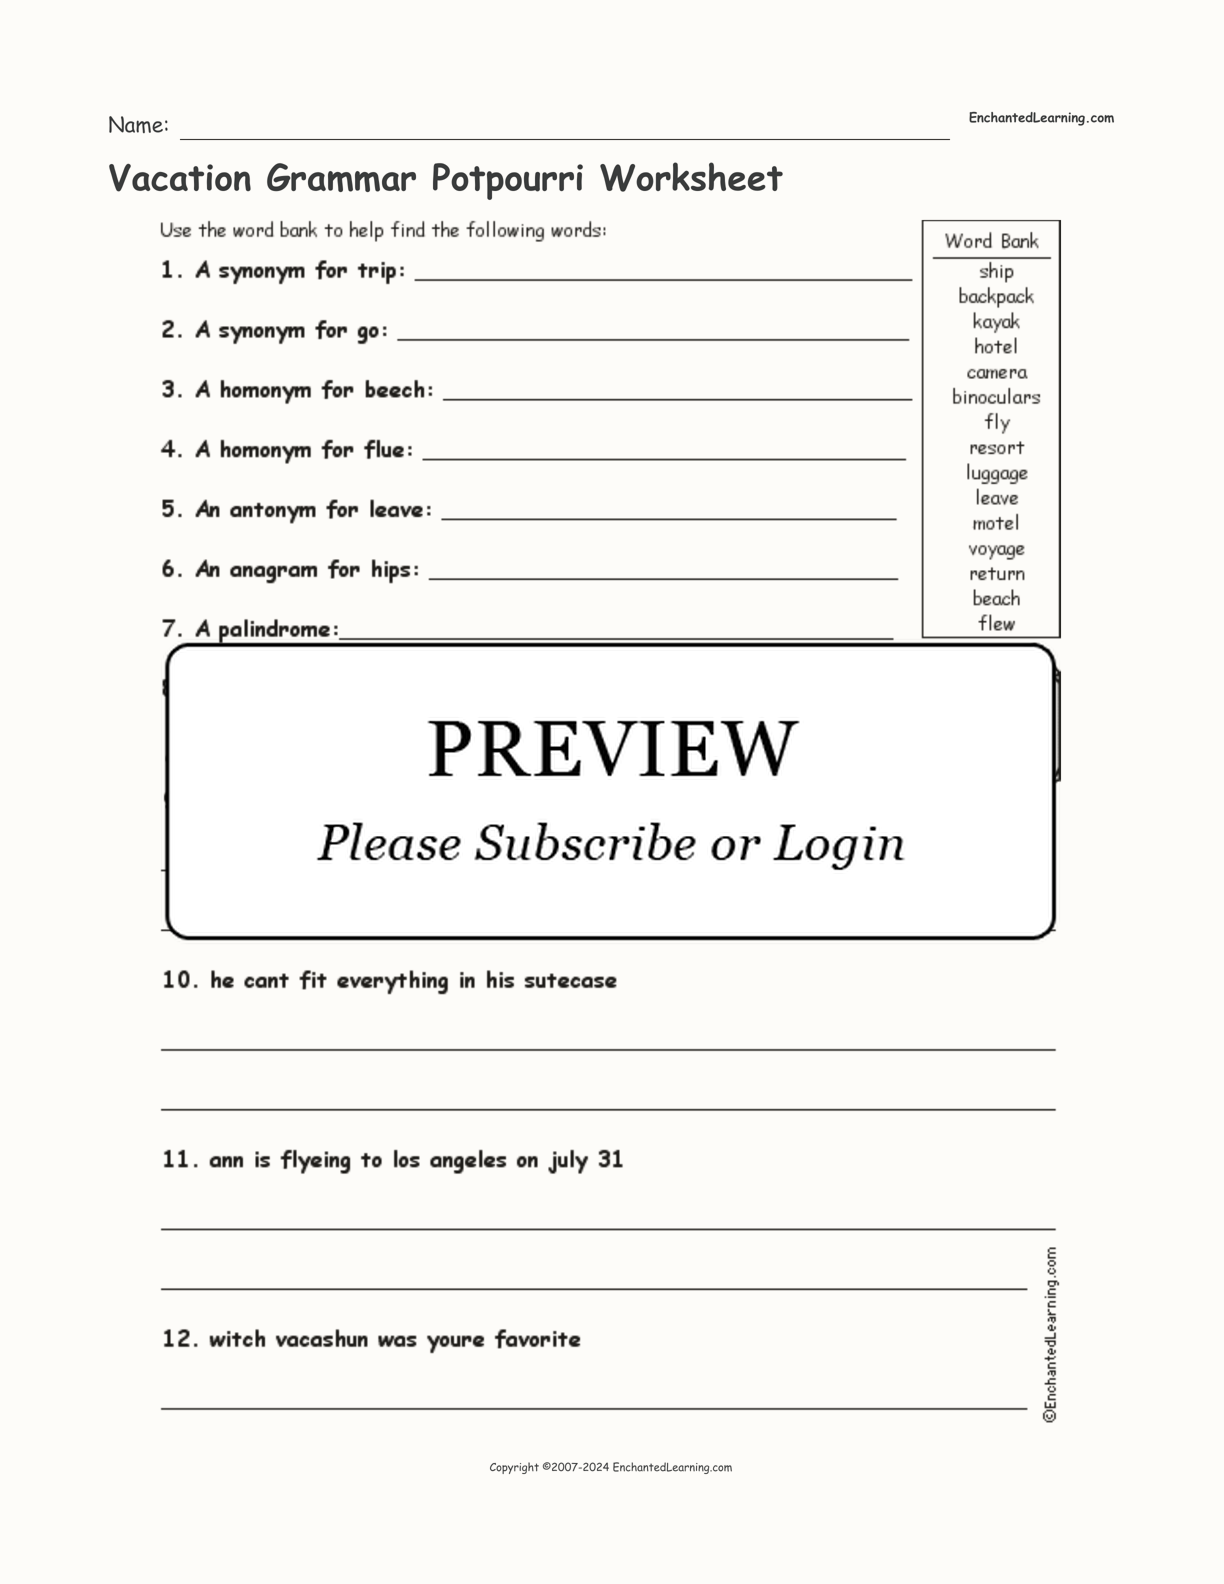 Vacation Grammar Potpourri Worksheet interactive worksheet page 1